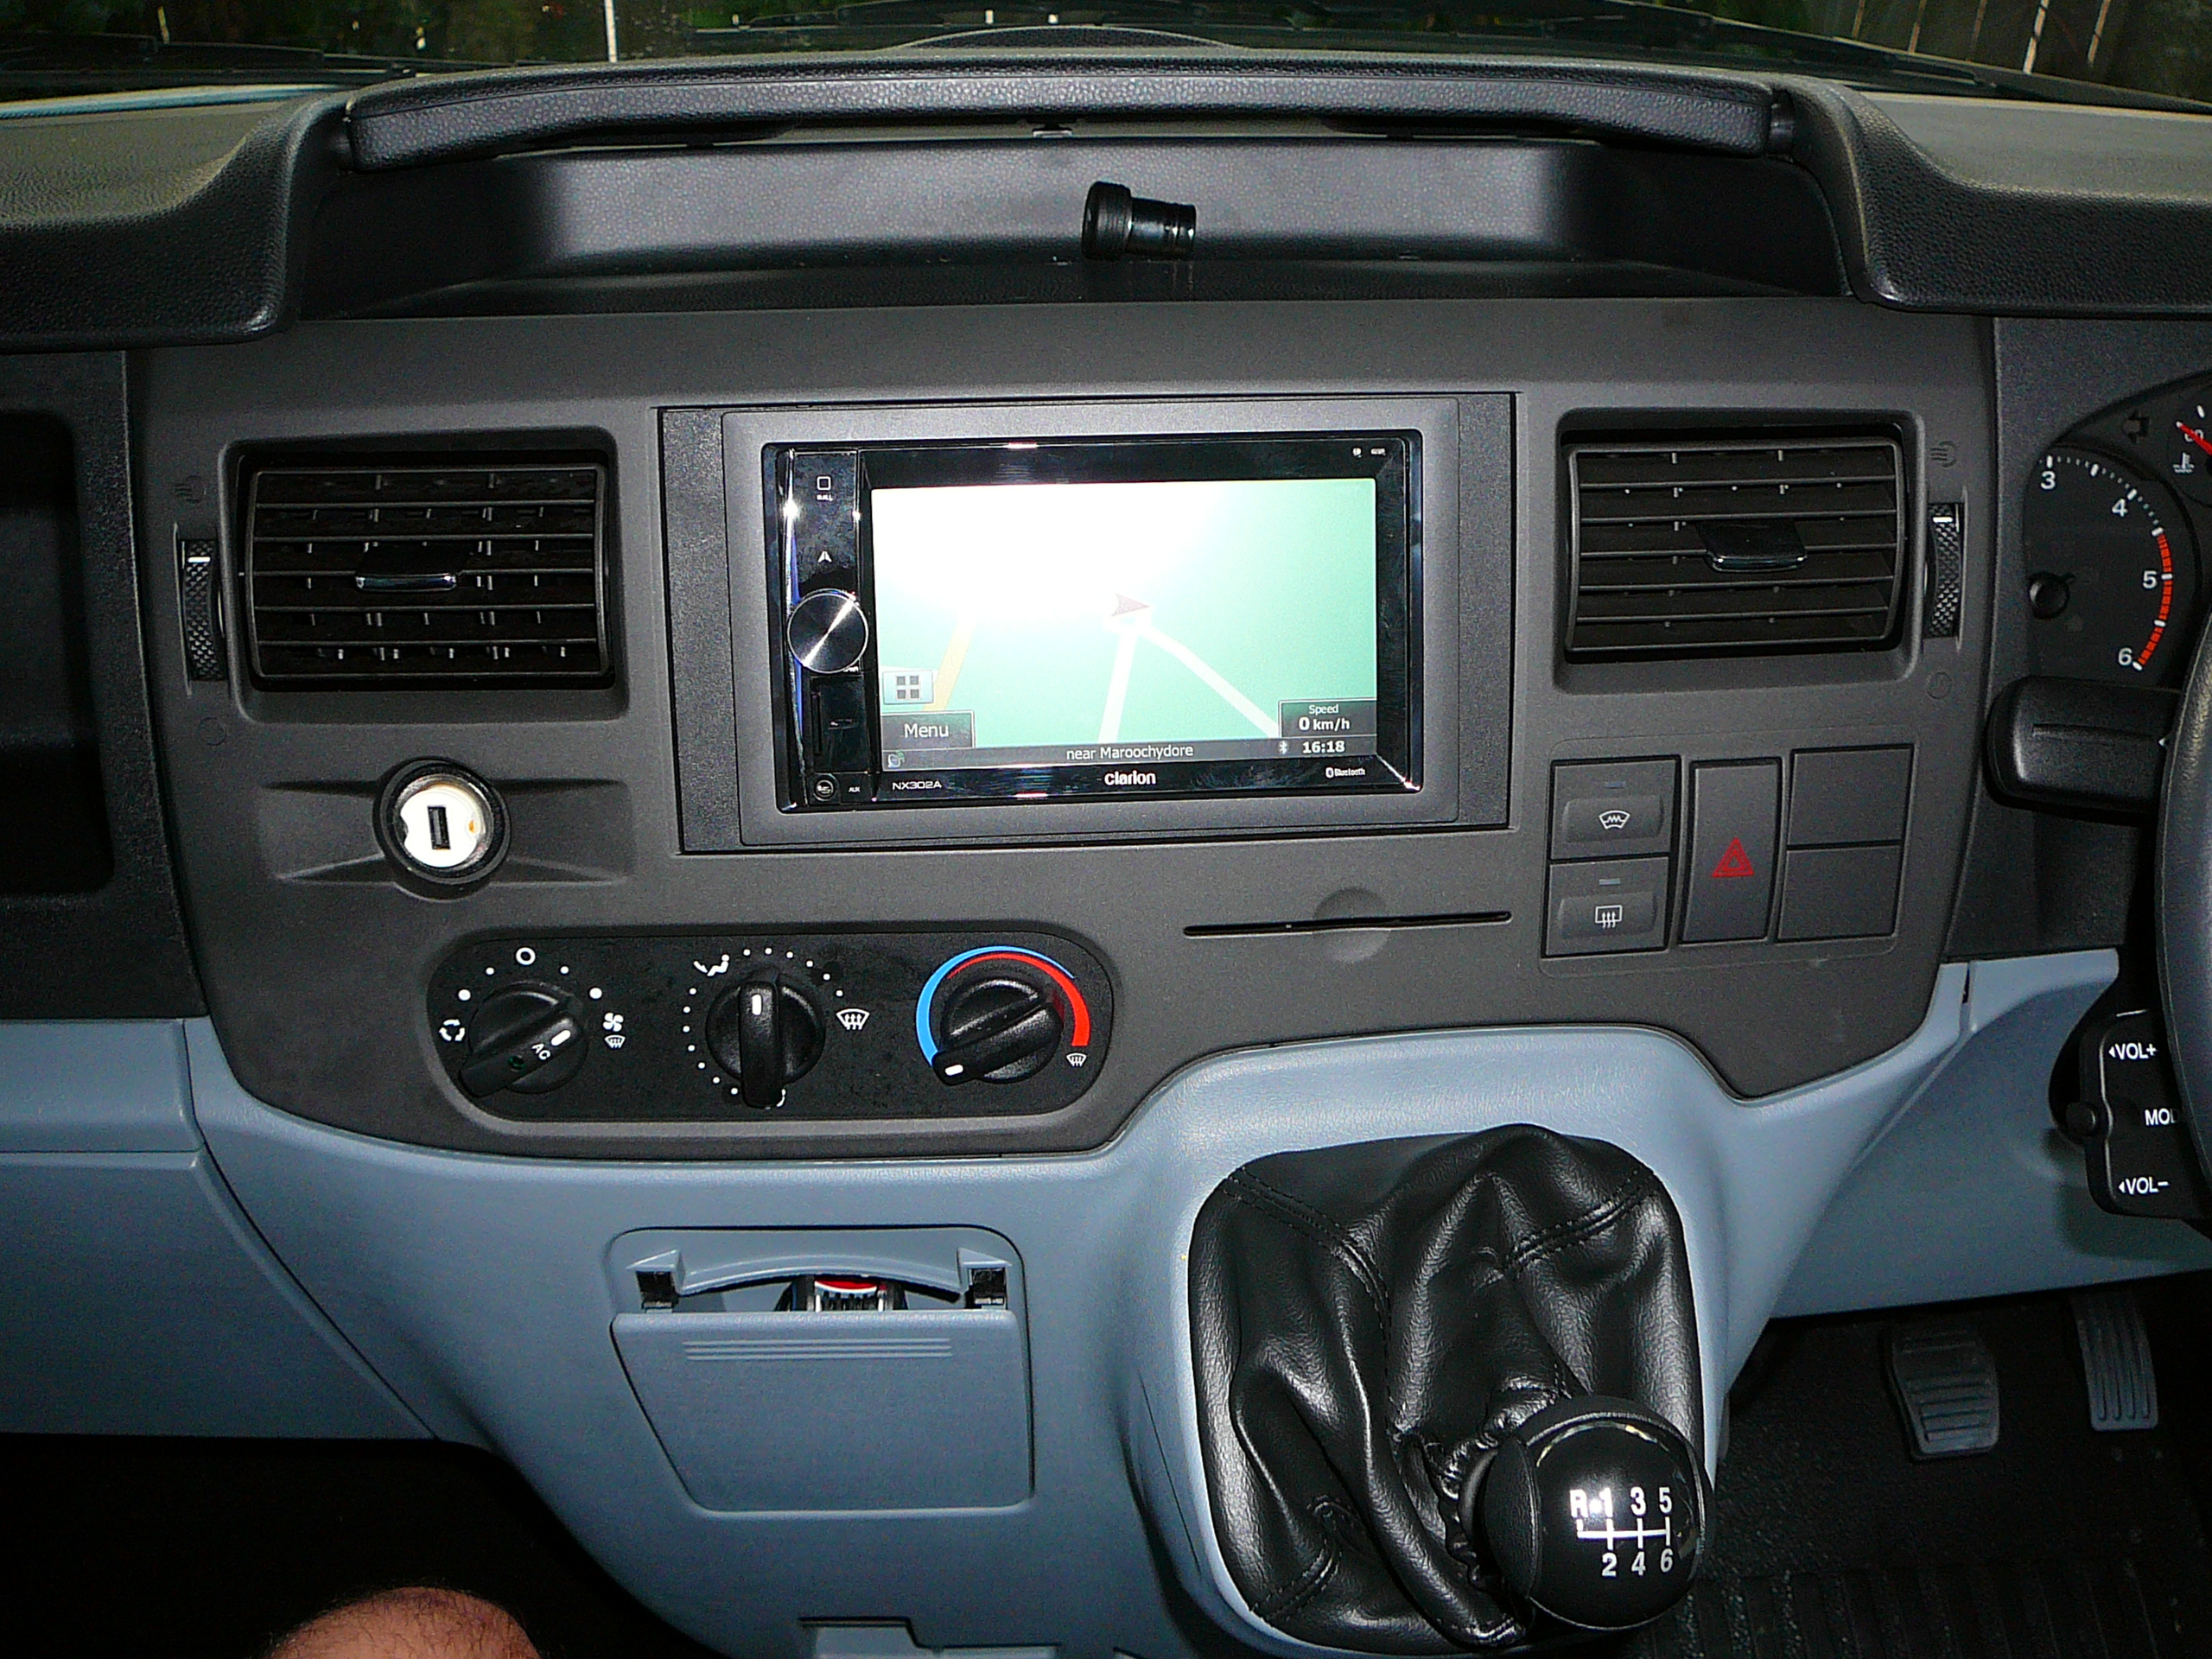 Ford Transit Clarion Indash GPS Navigation System and Reverse Camera